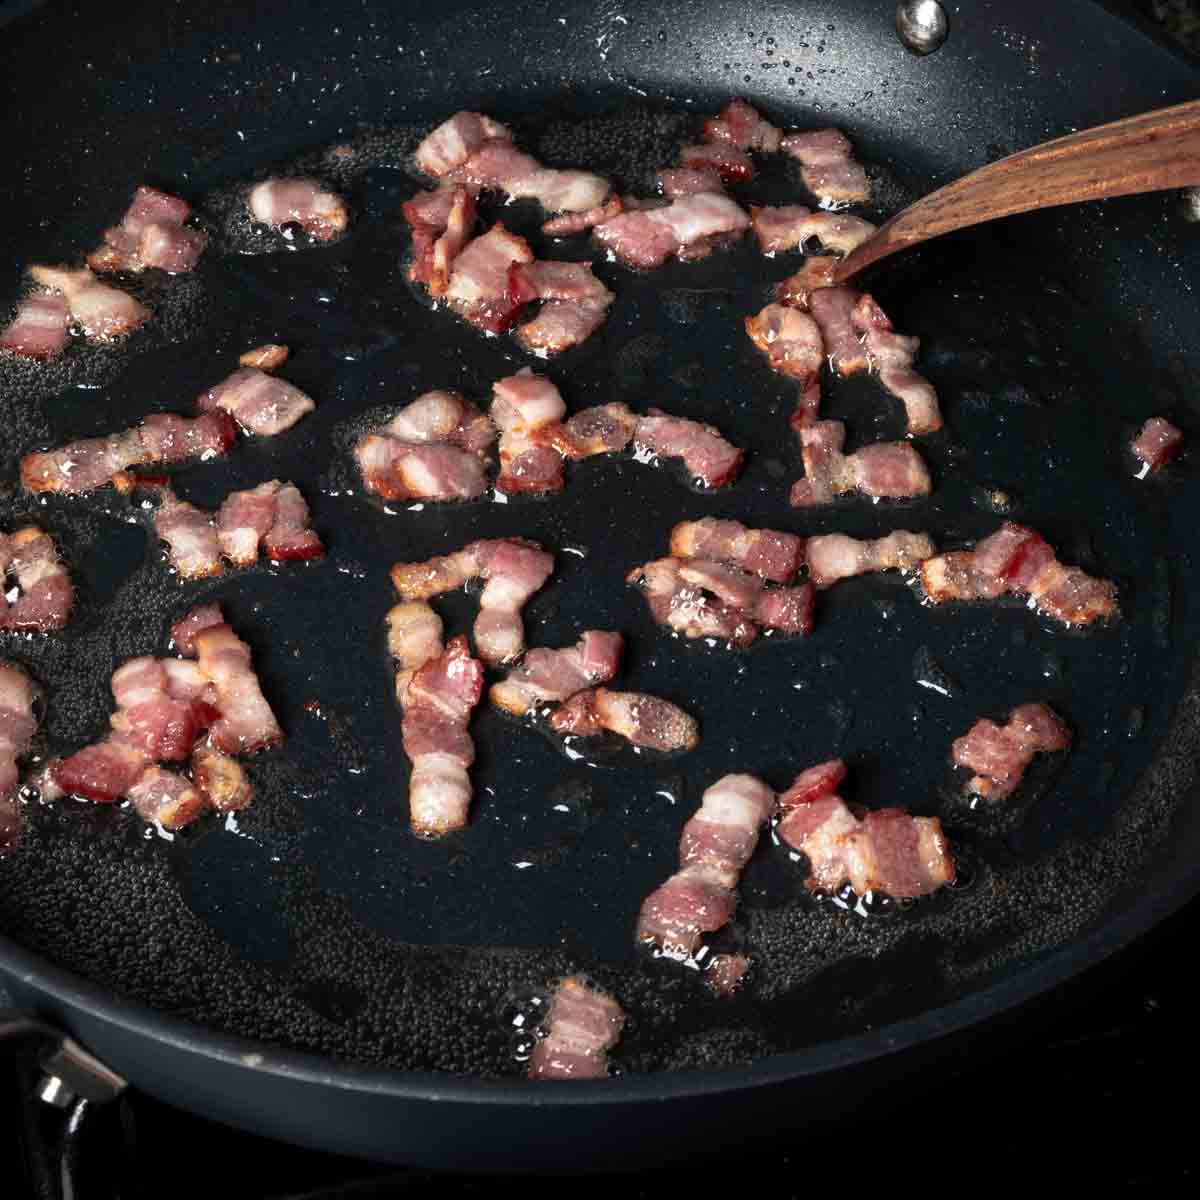 Sautéing chopped bacon in a pan.